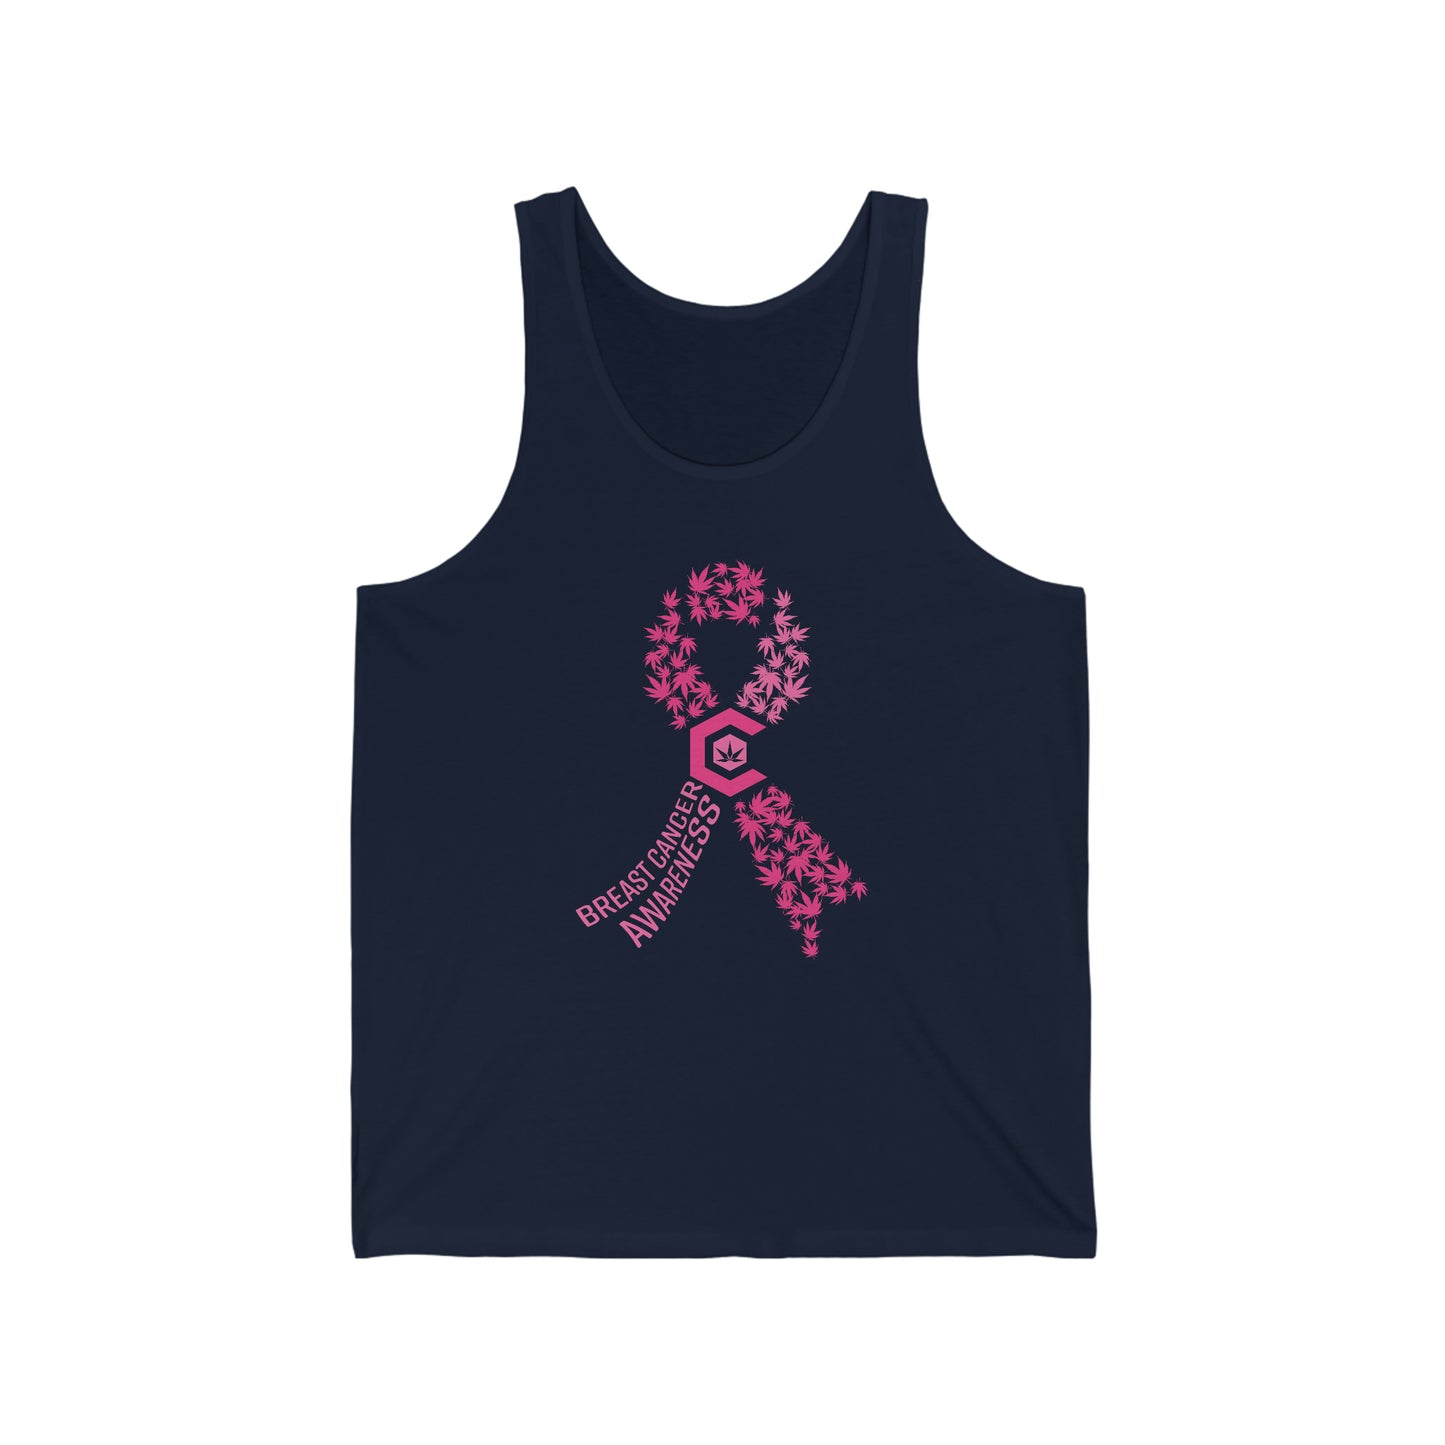 Pink ribbon breast cancer awareness cannabis jersey tank top.